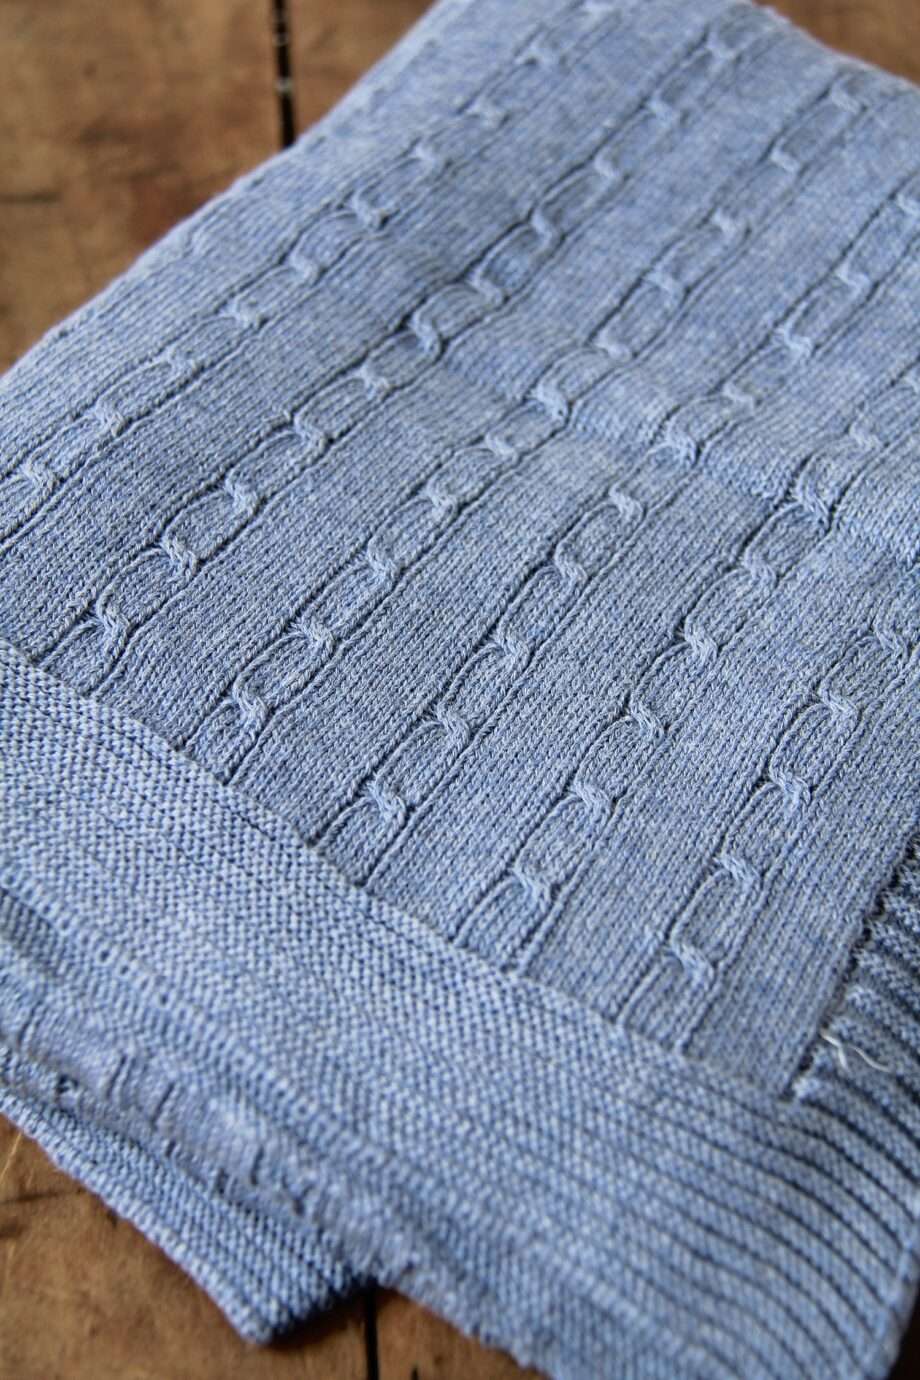 Closeup_twist small jeans blue cotton blanket